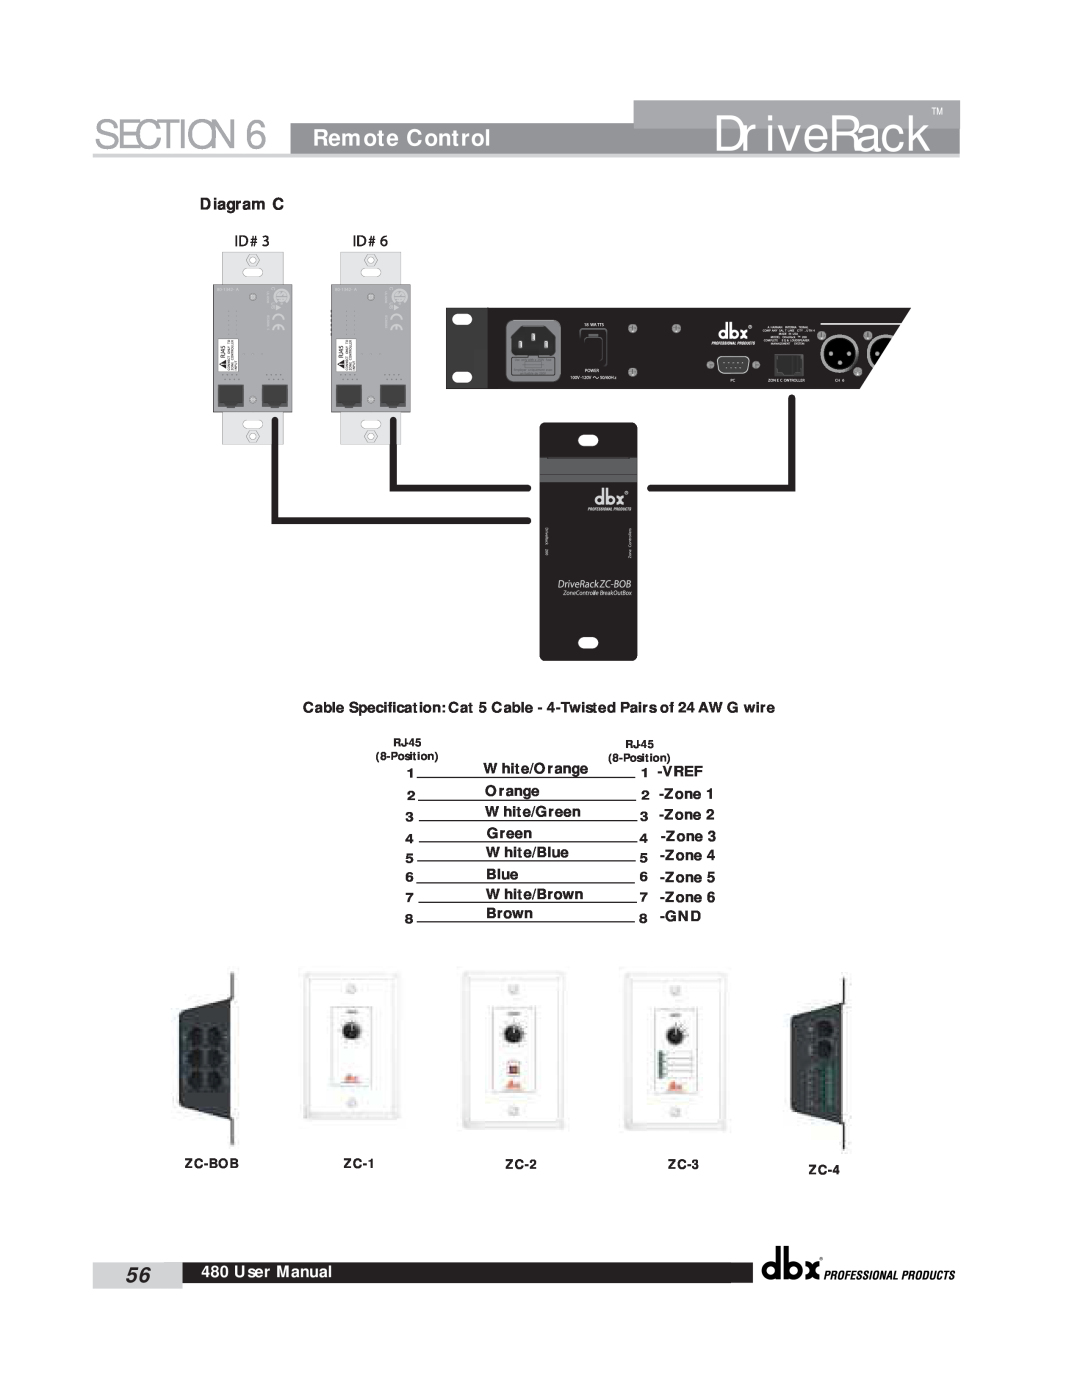 dbx Pro 260 user manual DriveRack, Section, Remote Control, Diagram C 